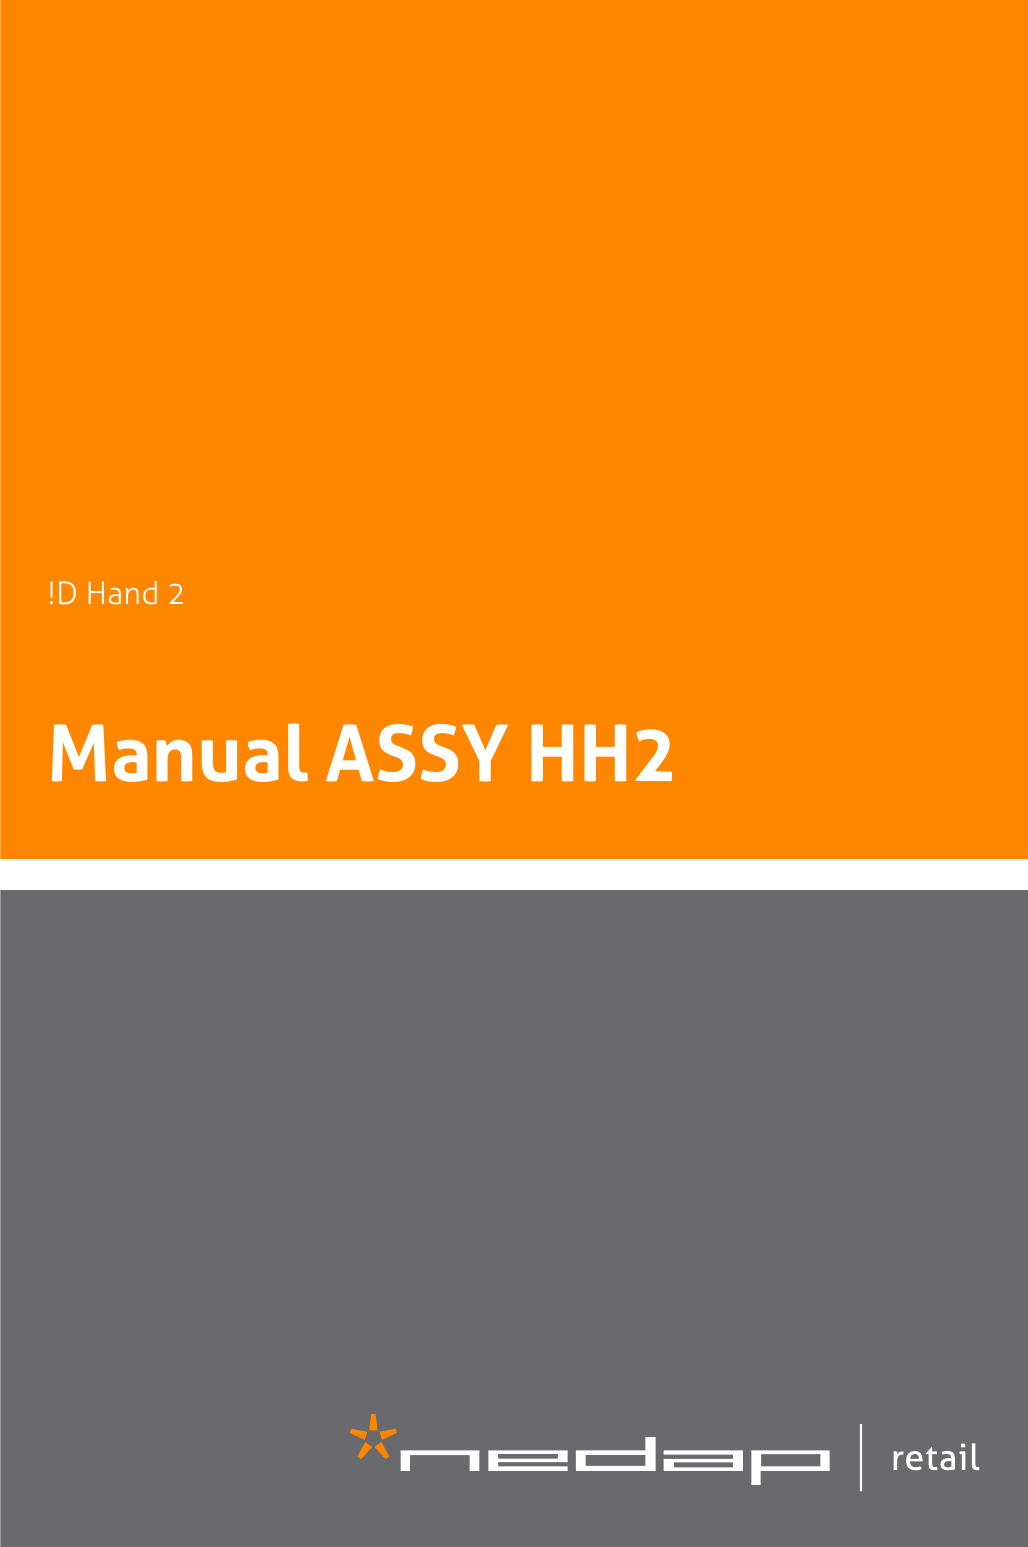 !D Hand 2Manual ASSY HH2